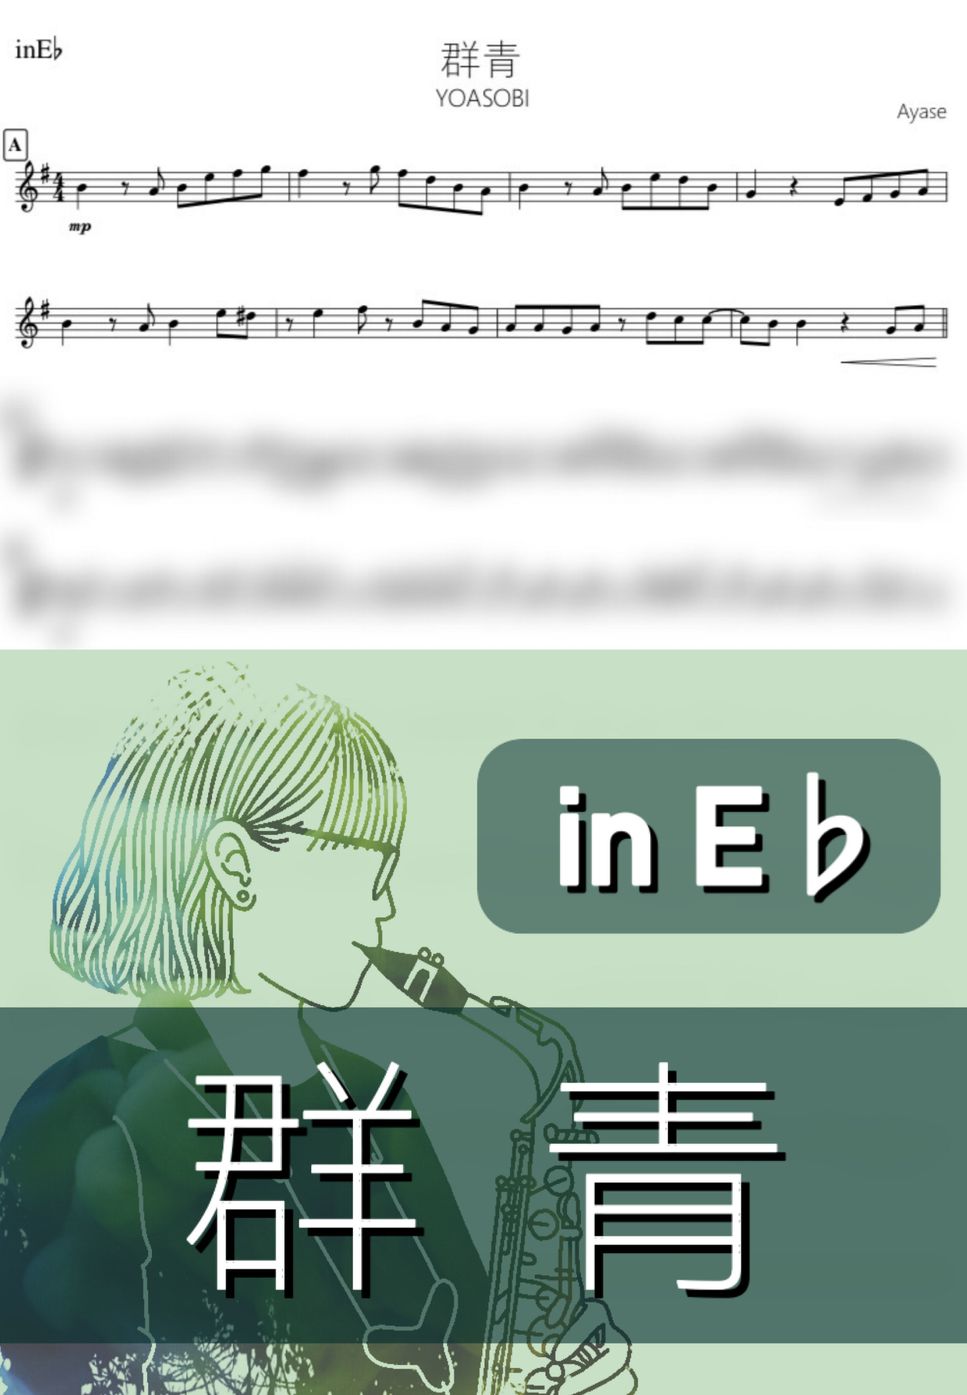 YOASOBI - 群青 (E♭) by kanamusic